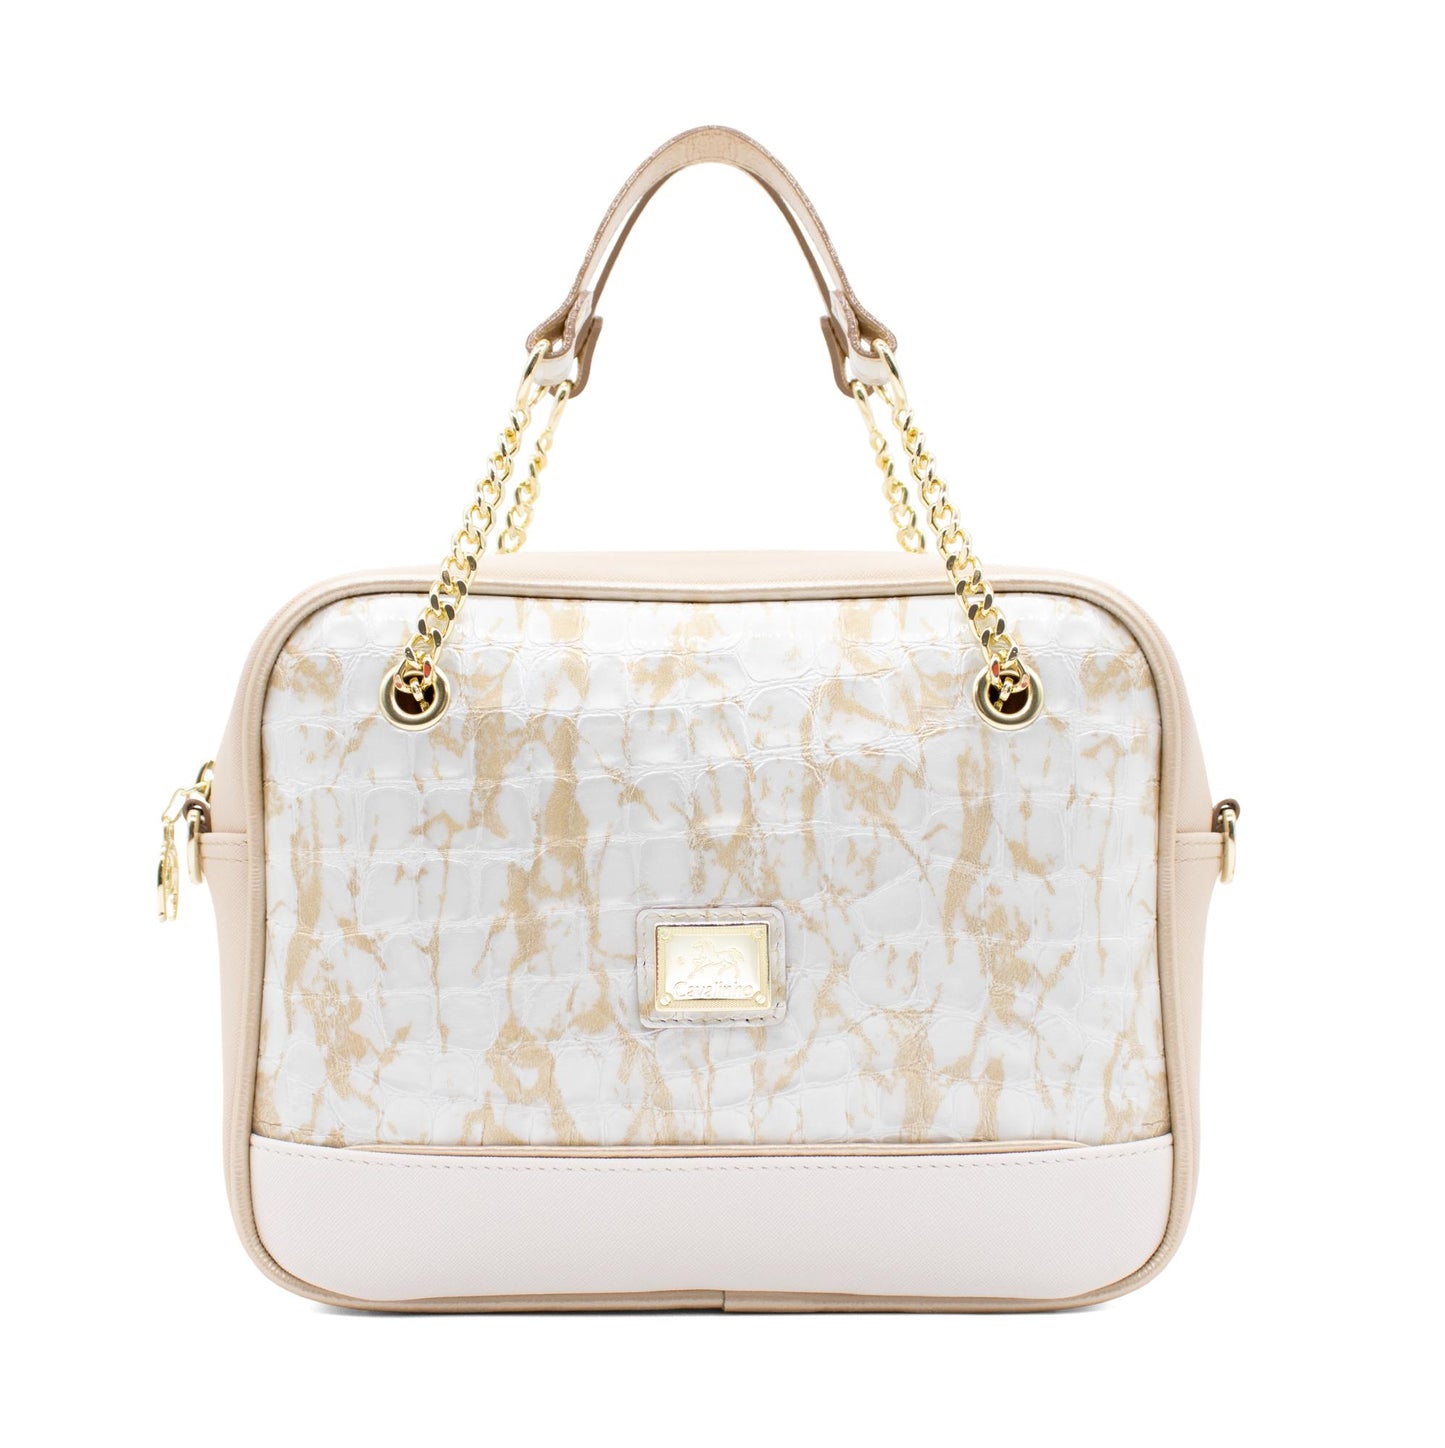 Cavalinho Mystic Handbag - Beige / White - 18460512.31_1